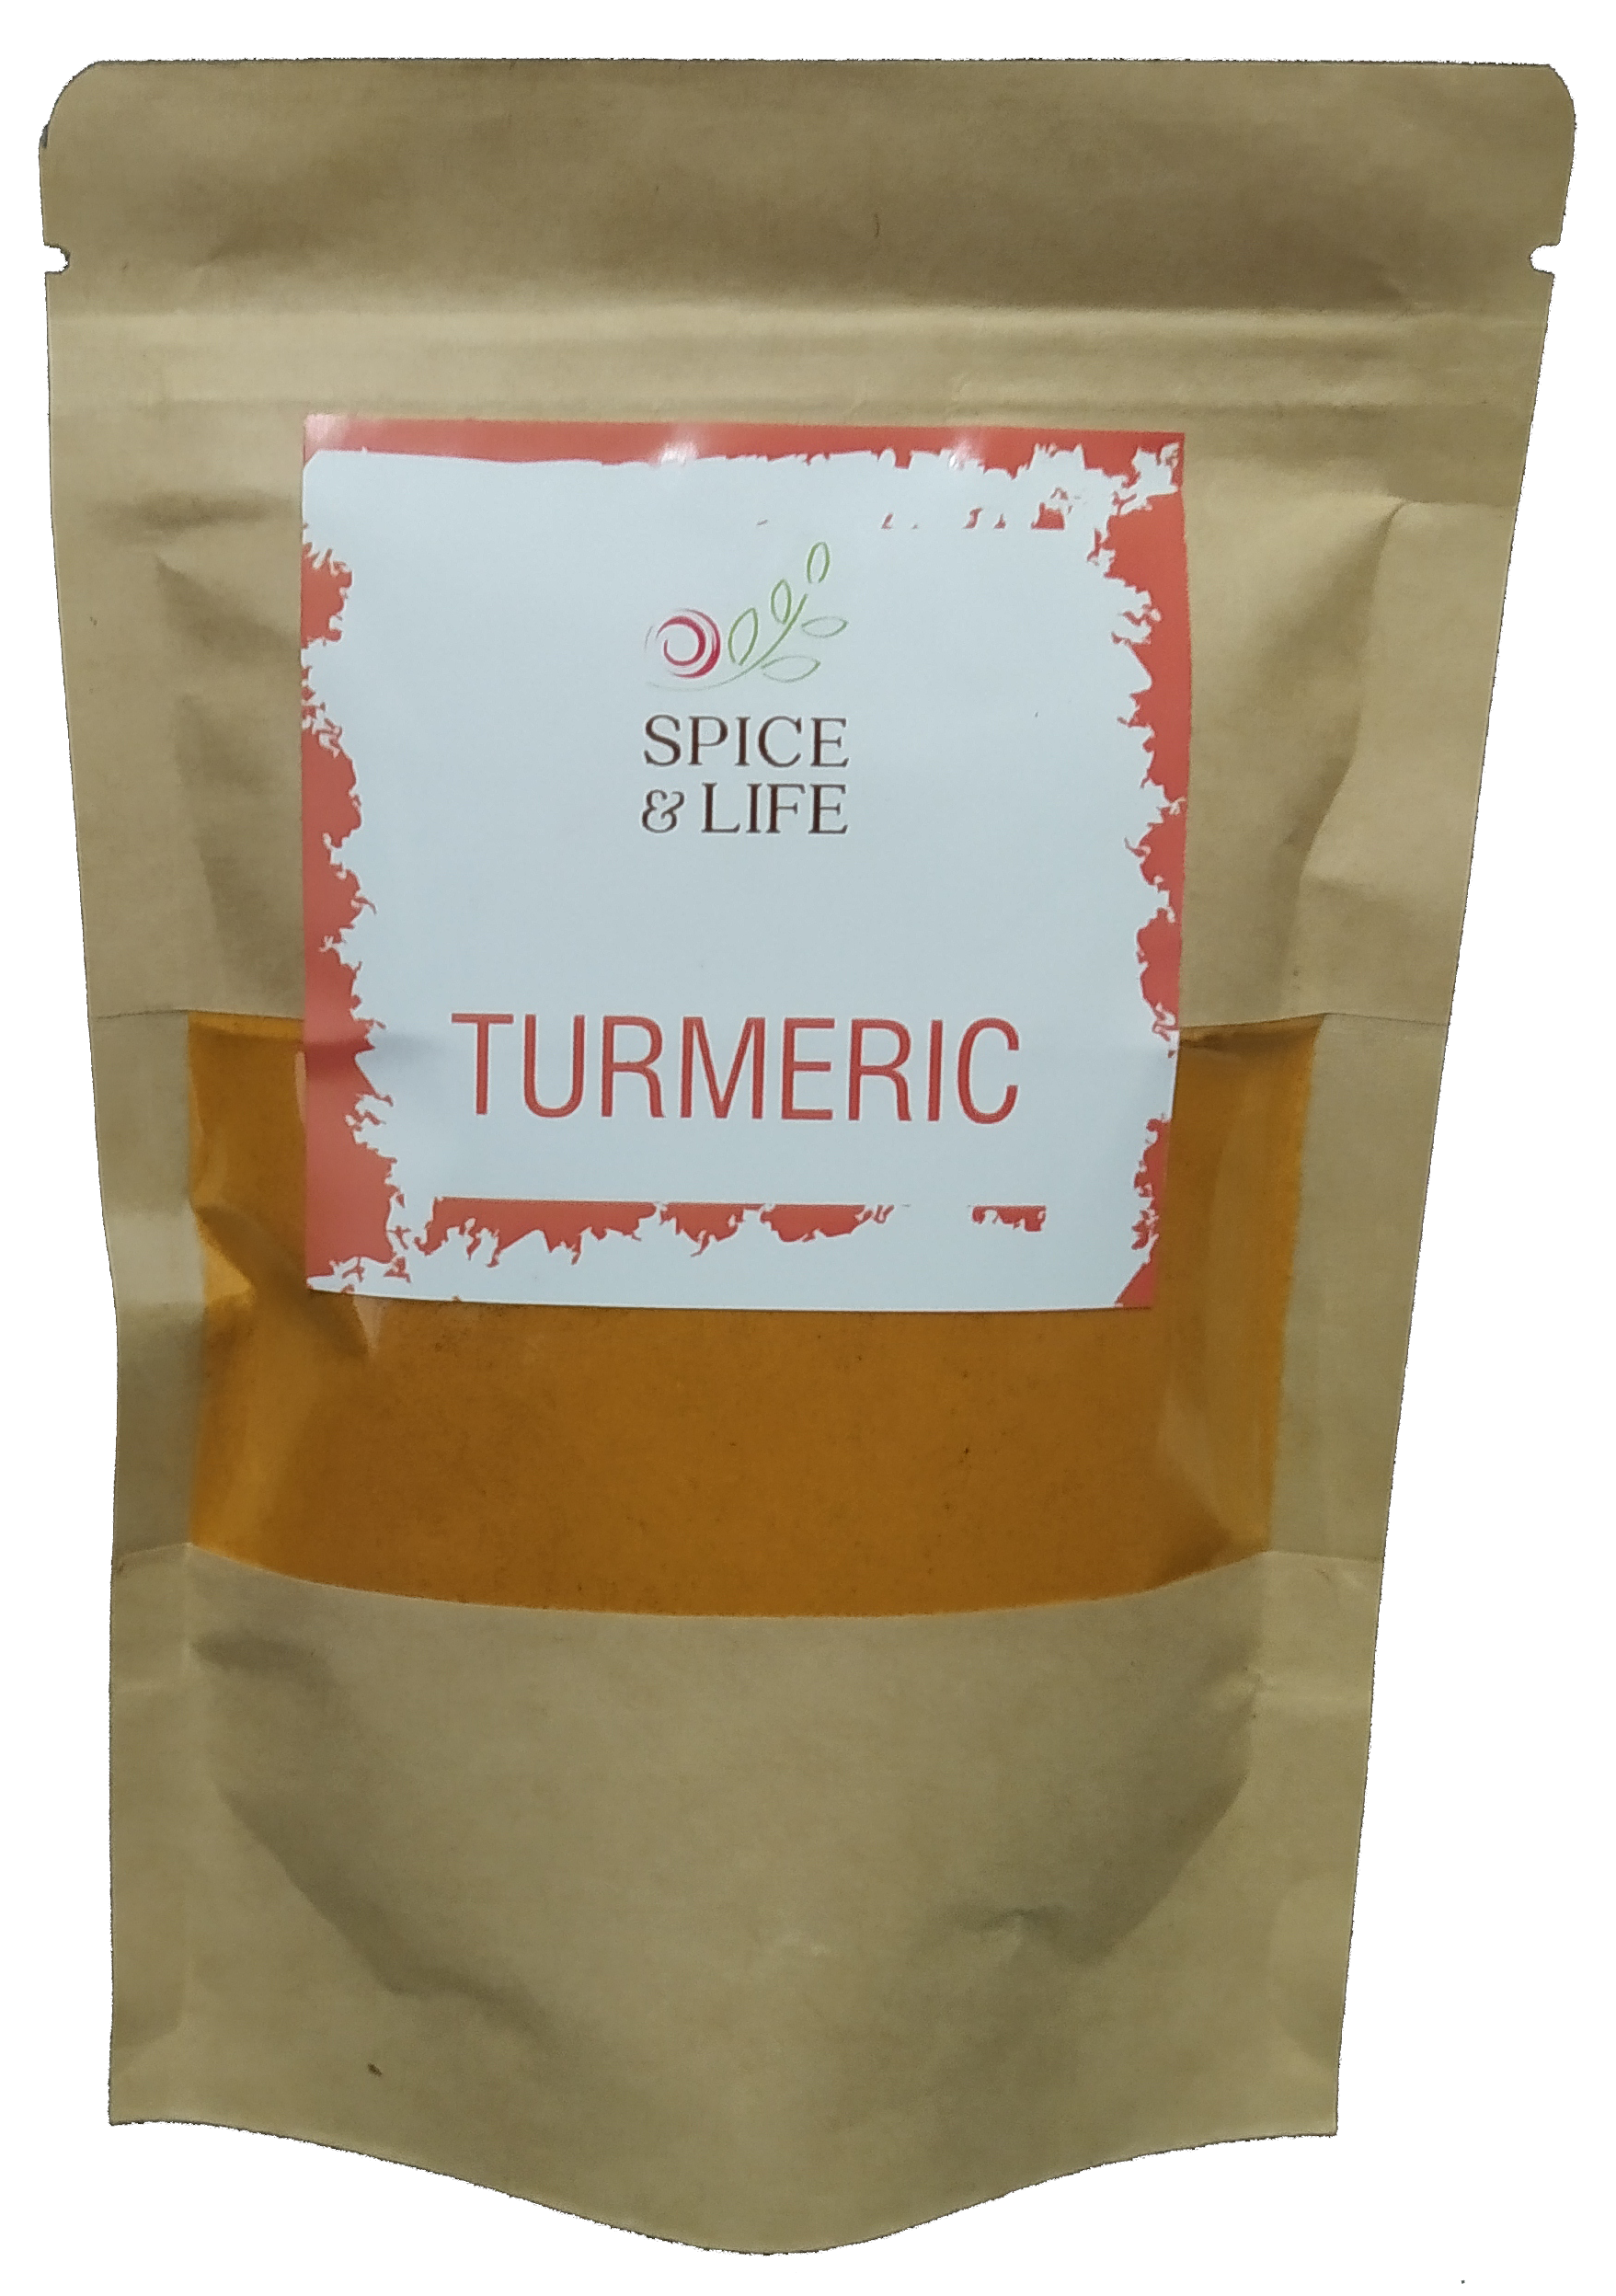 Turmeric powder 50g. Spice & Life